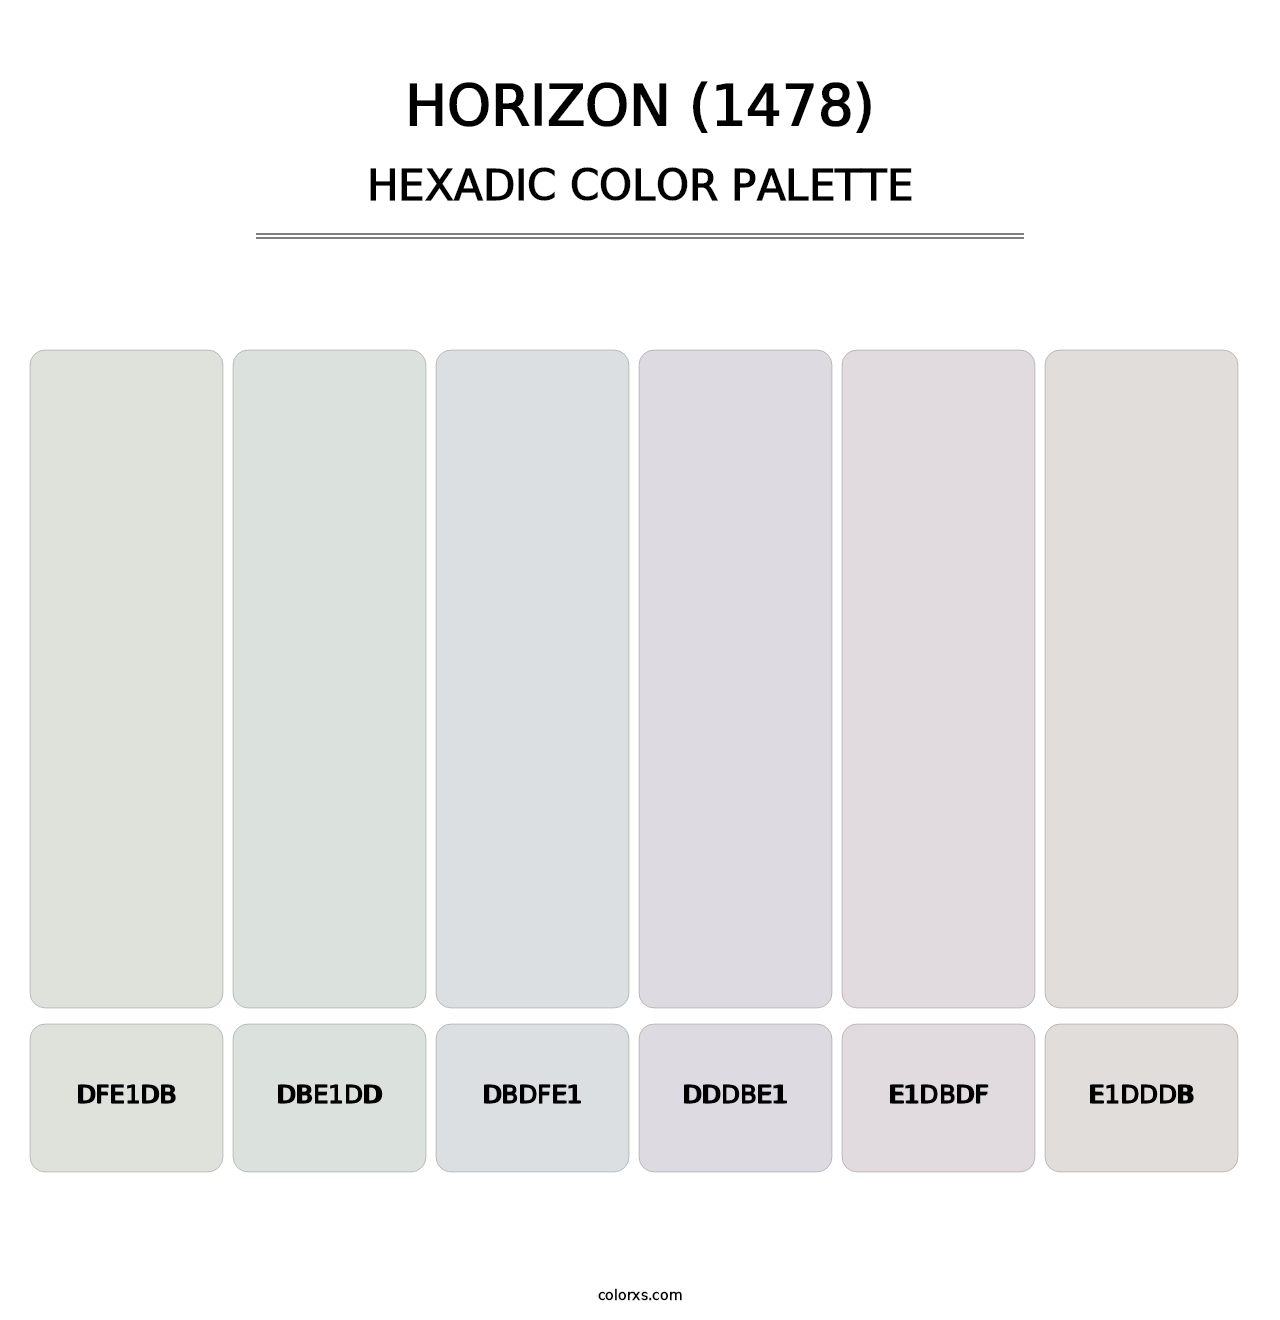 Horizon (1478) - Hexadic Color Palette